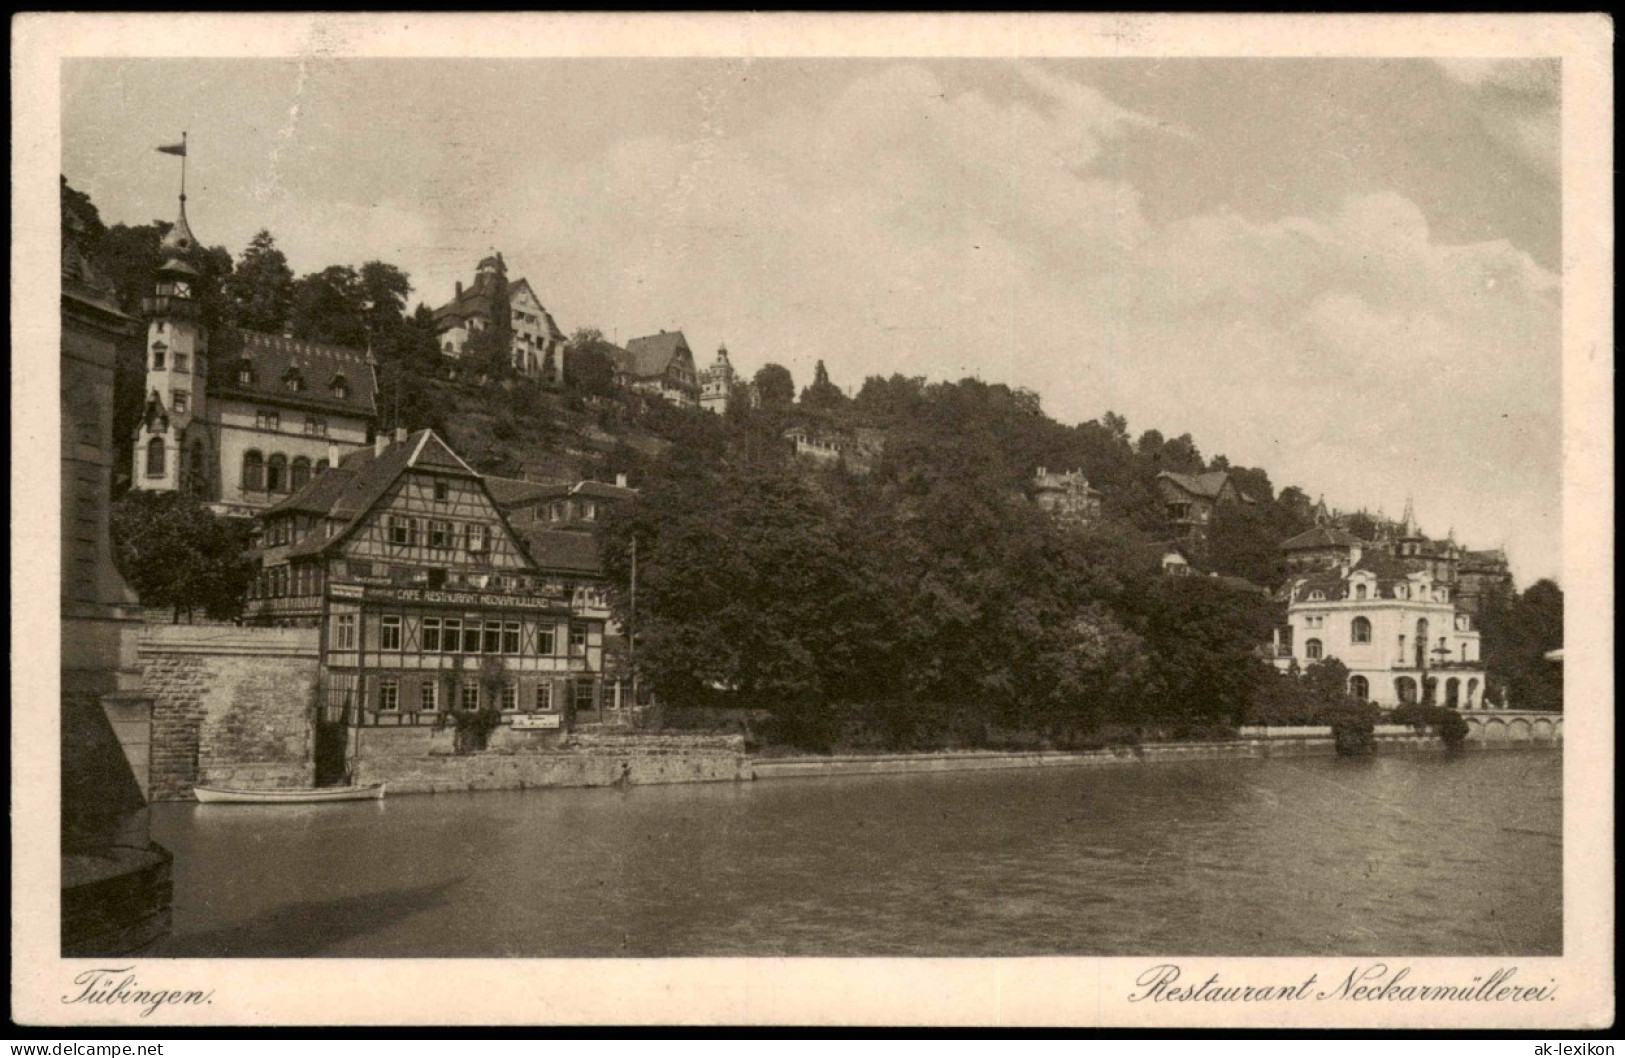 Ansichtskarte Tübingen Restaurant Neckarmüllerei. 1927 - Tübingen